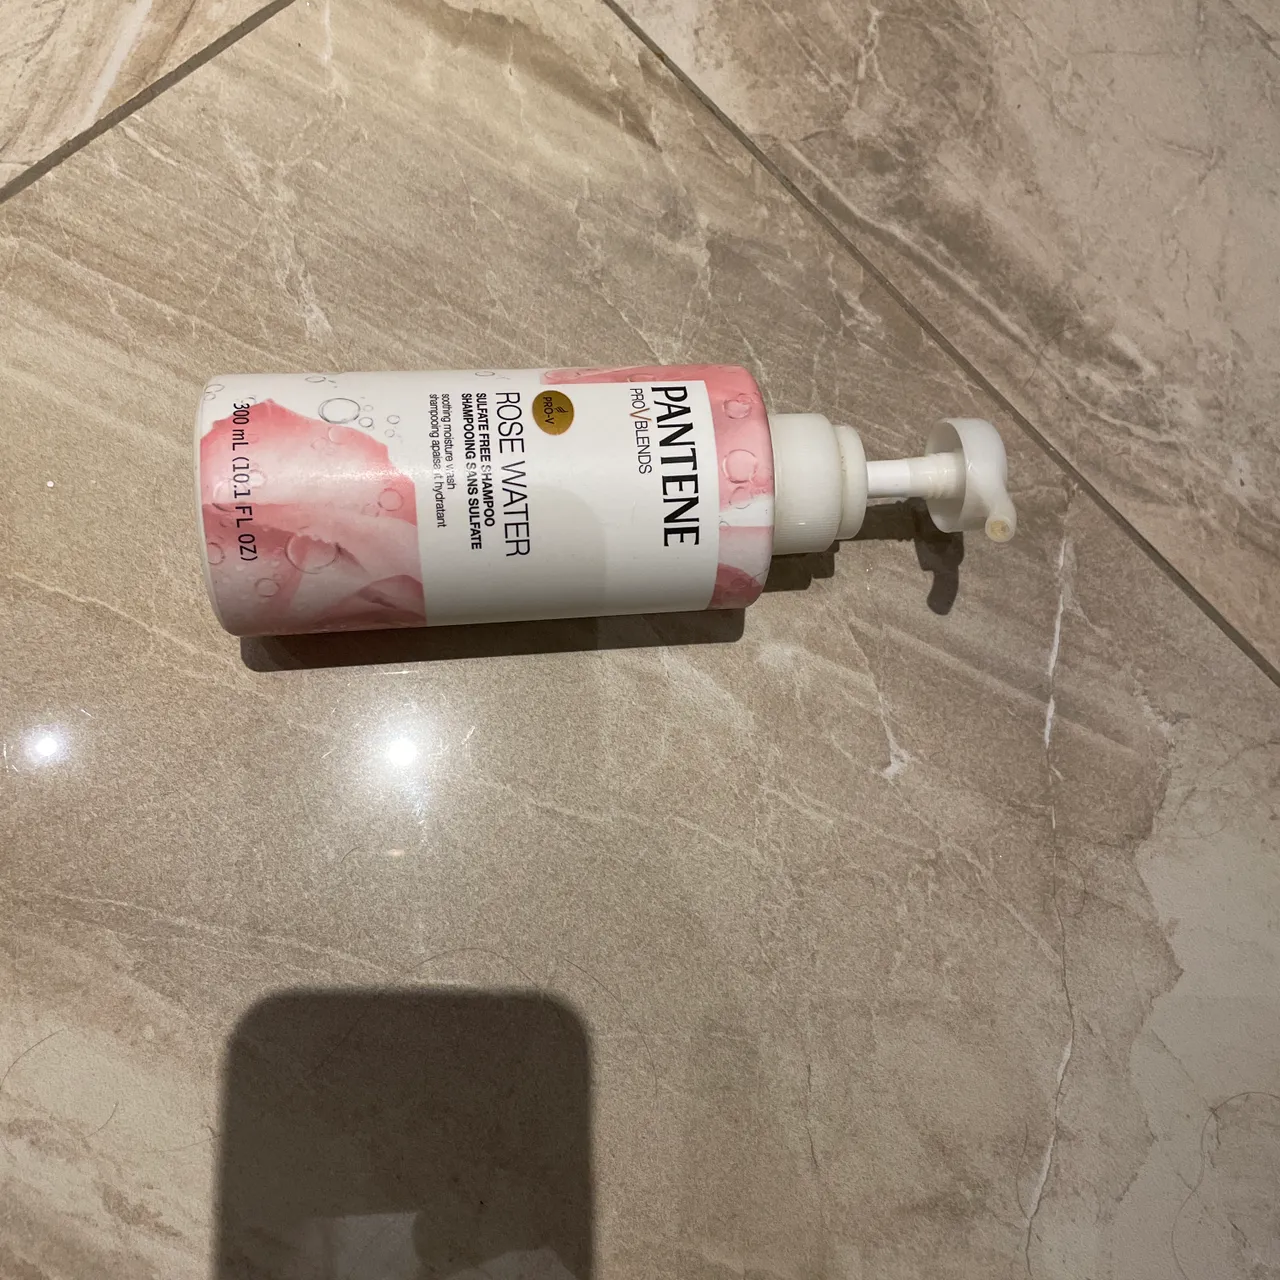 Pantene rose water shampoo photo 1